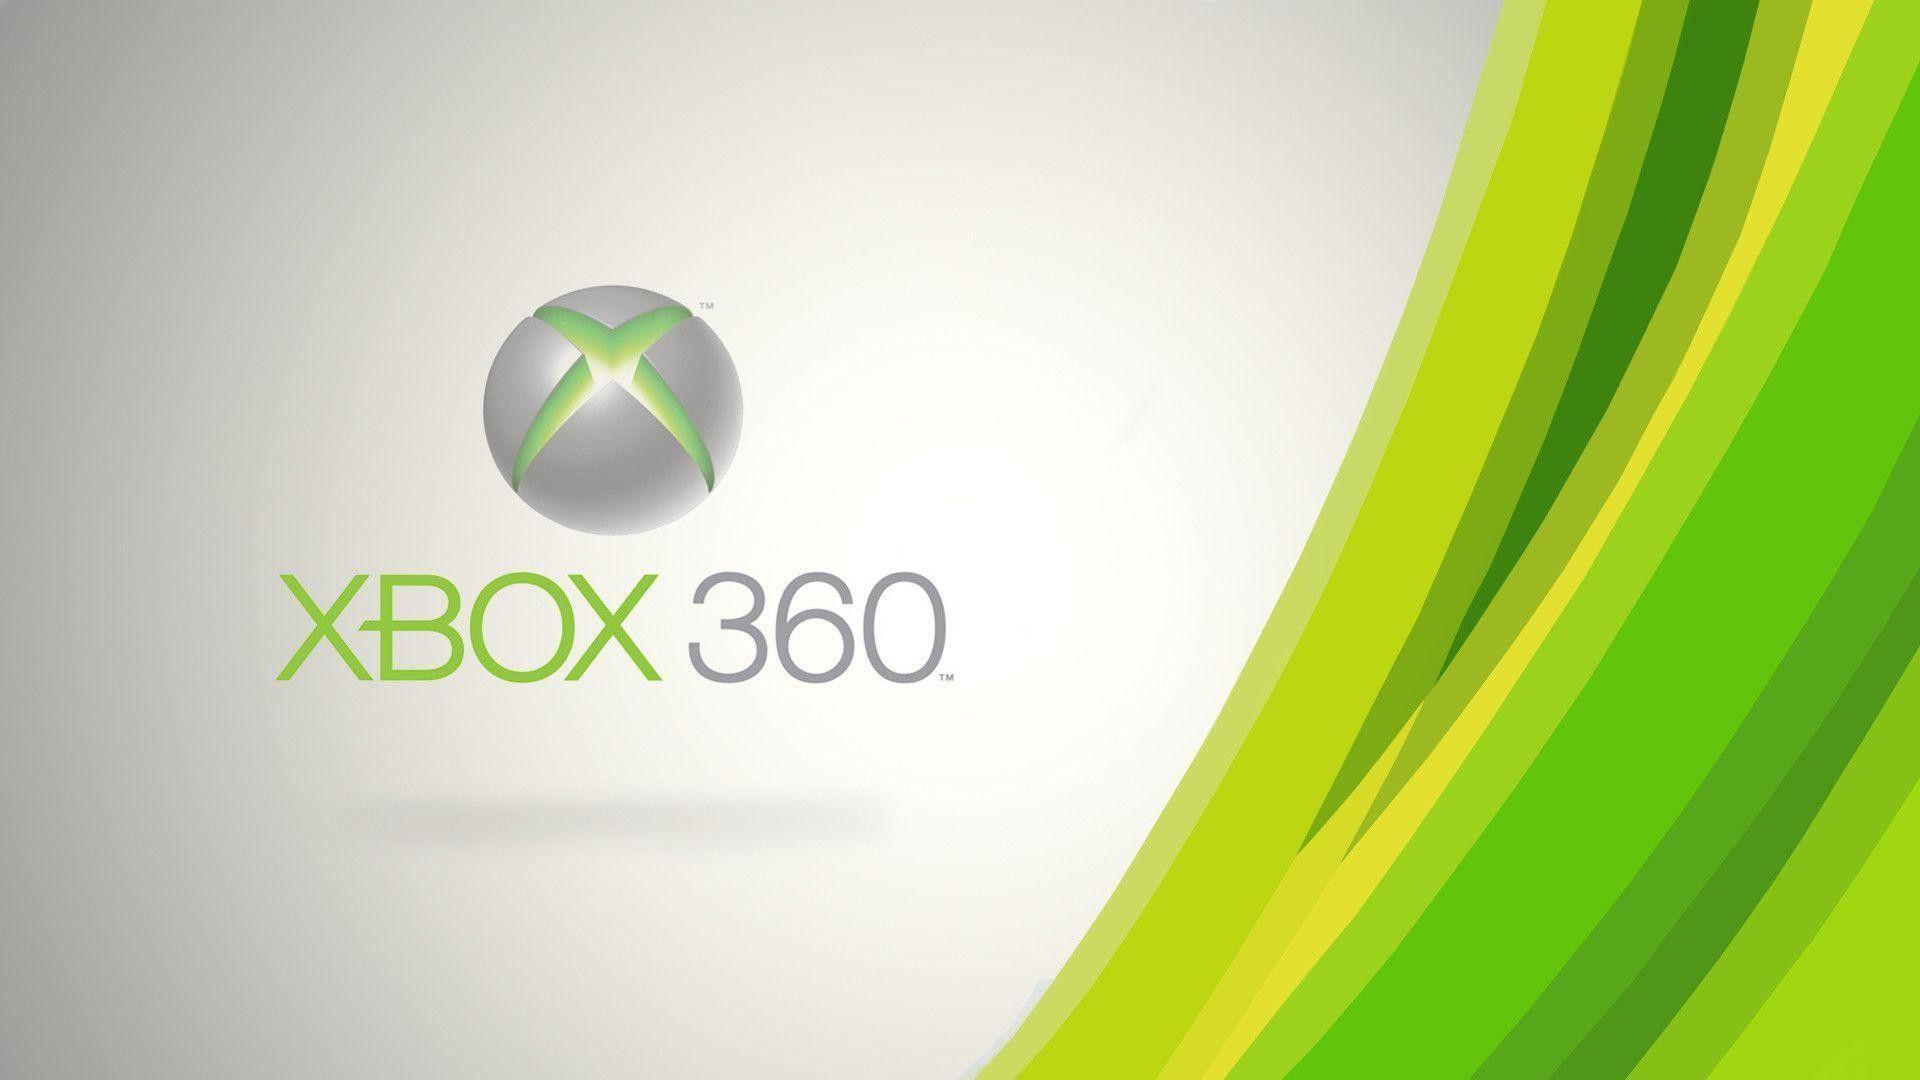 Xbox 360 Logo 1080p Photo. Beautiful image HD Picture & Desktop